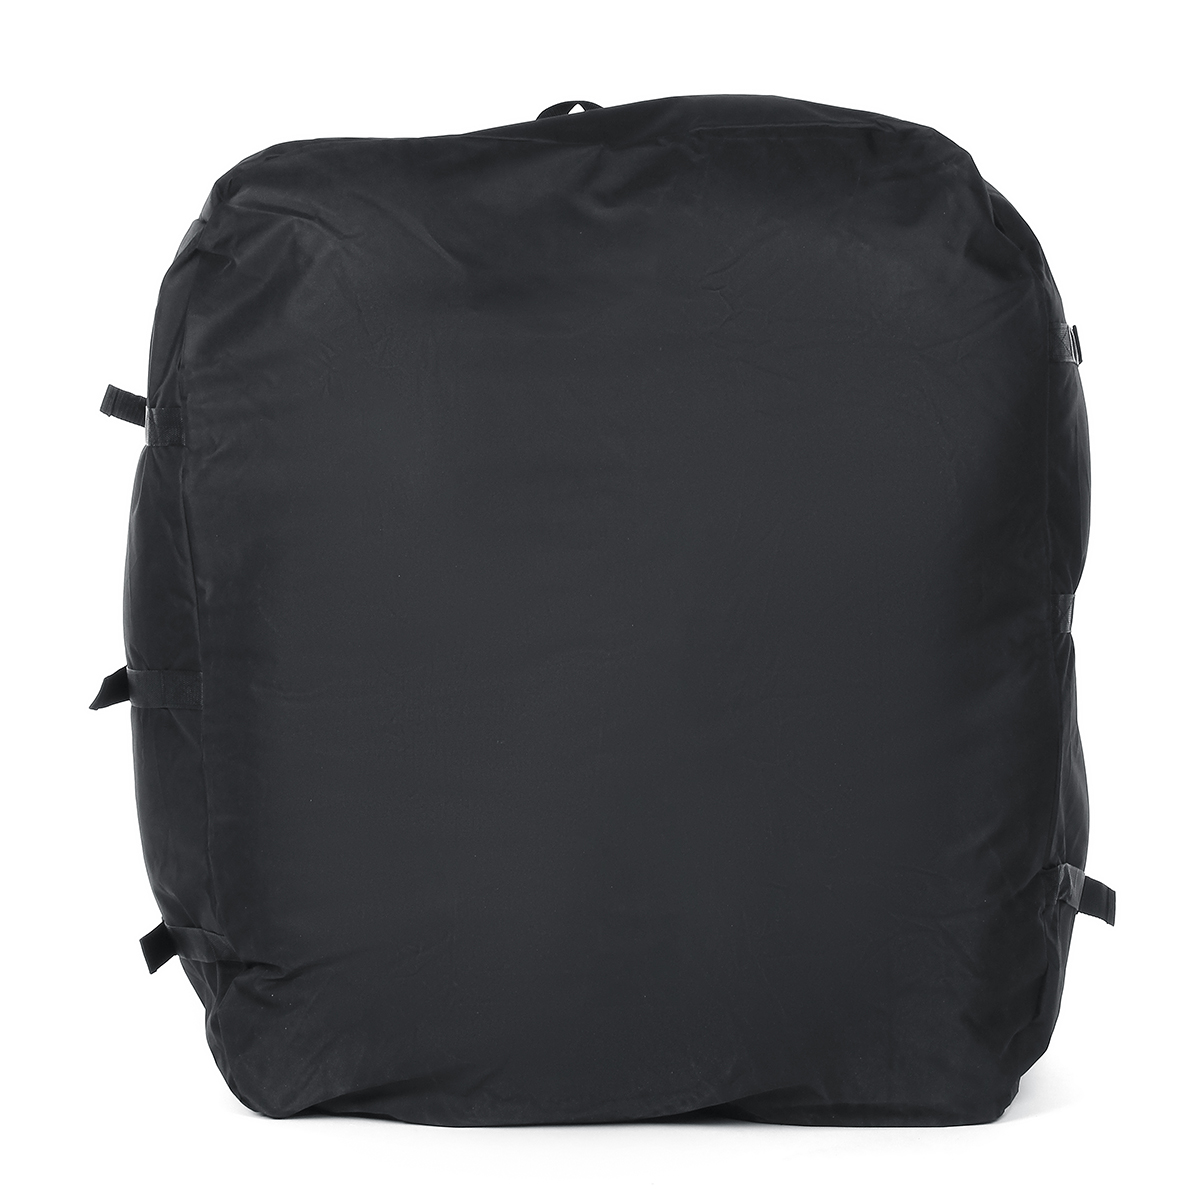 Portable-Travel-Storage-Bag-Waterproof-Car-SUV-Roof-Top-Rack-Bag-600D-Oxford-Travel-Luggage-Storage--1812090-5